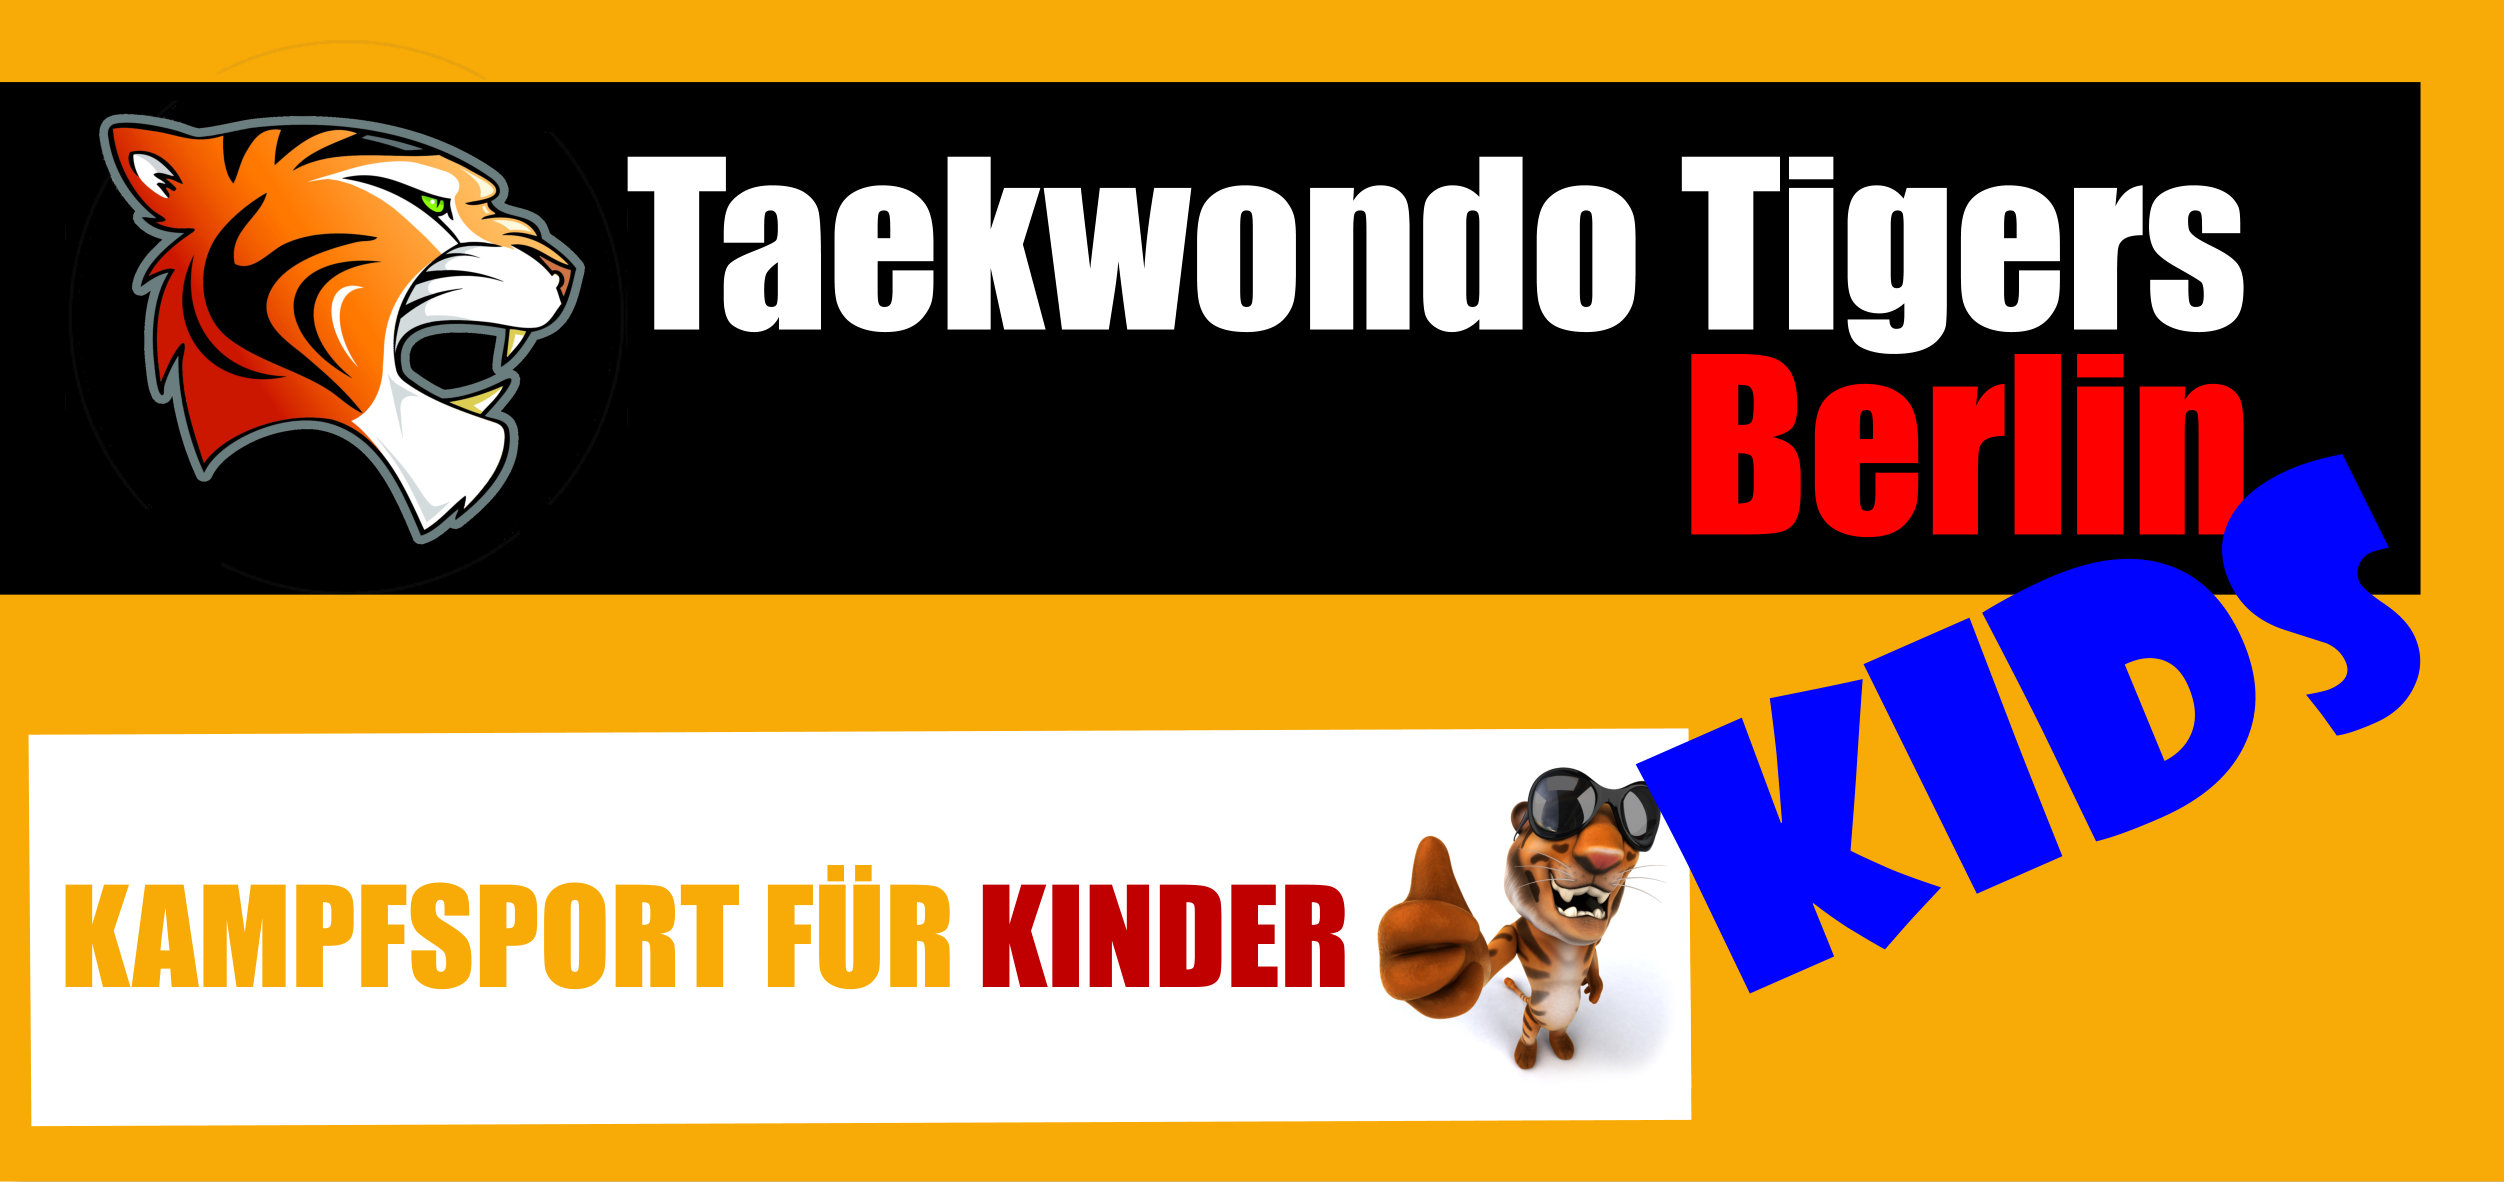 Flyer der Kindergruppe der Taekwondo Tigers Berlin